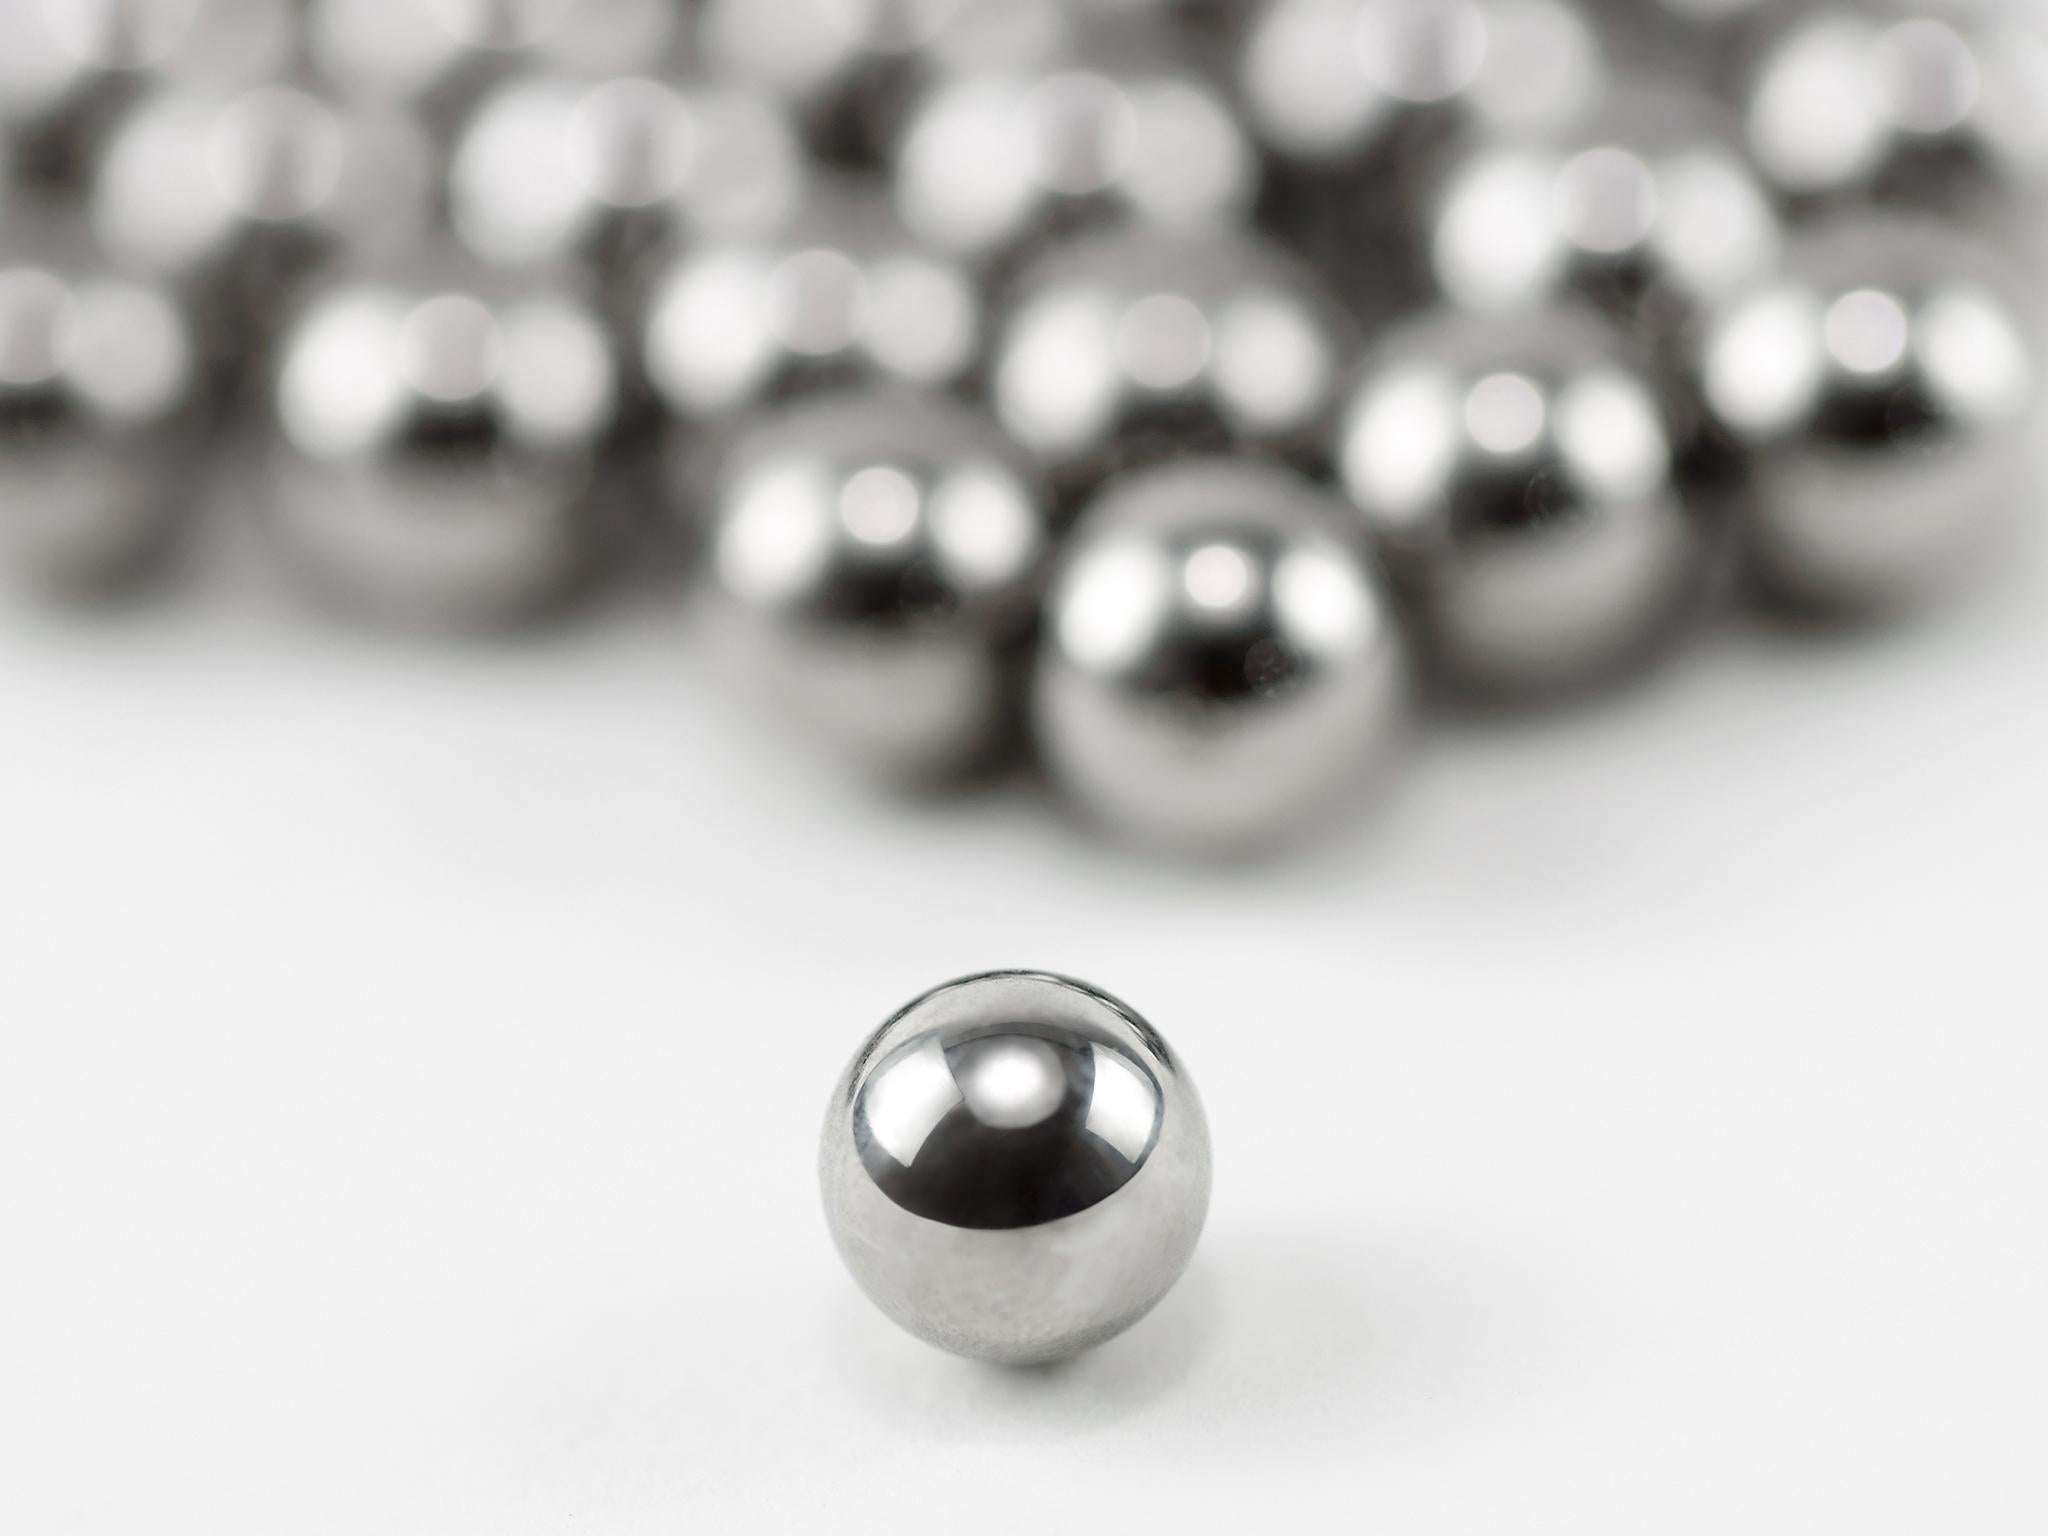 giant magnetic balls